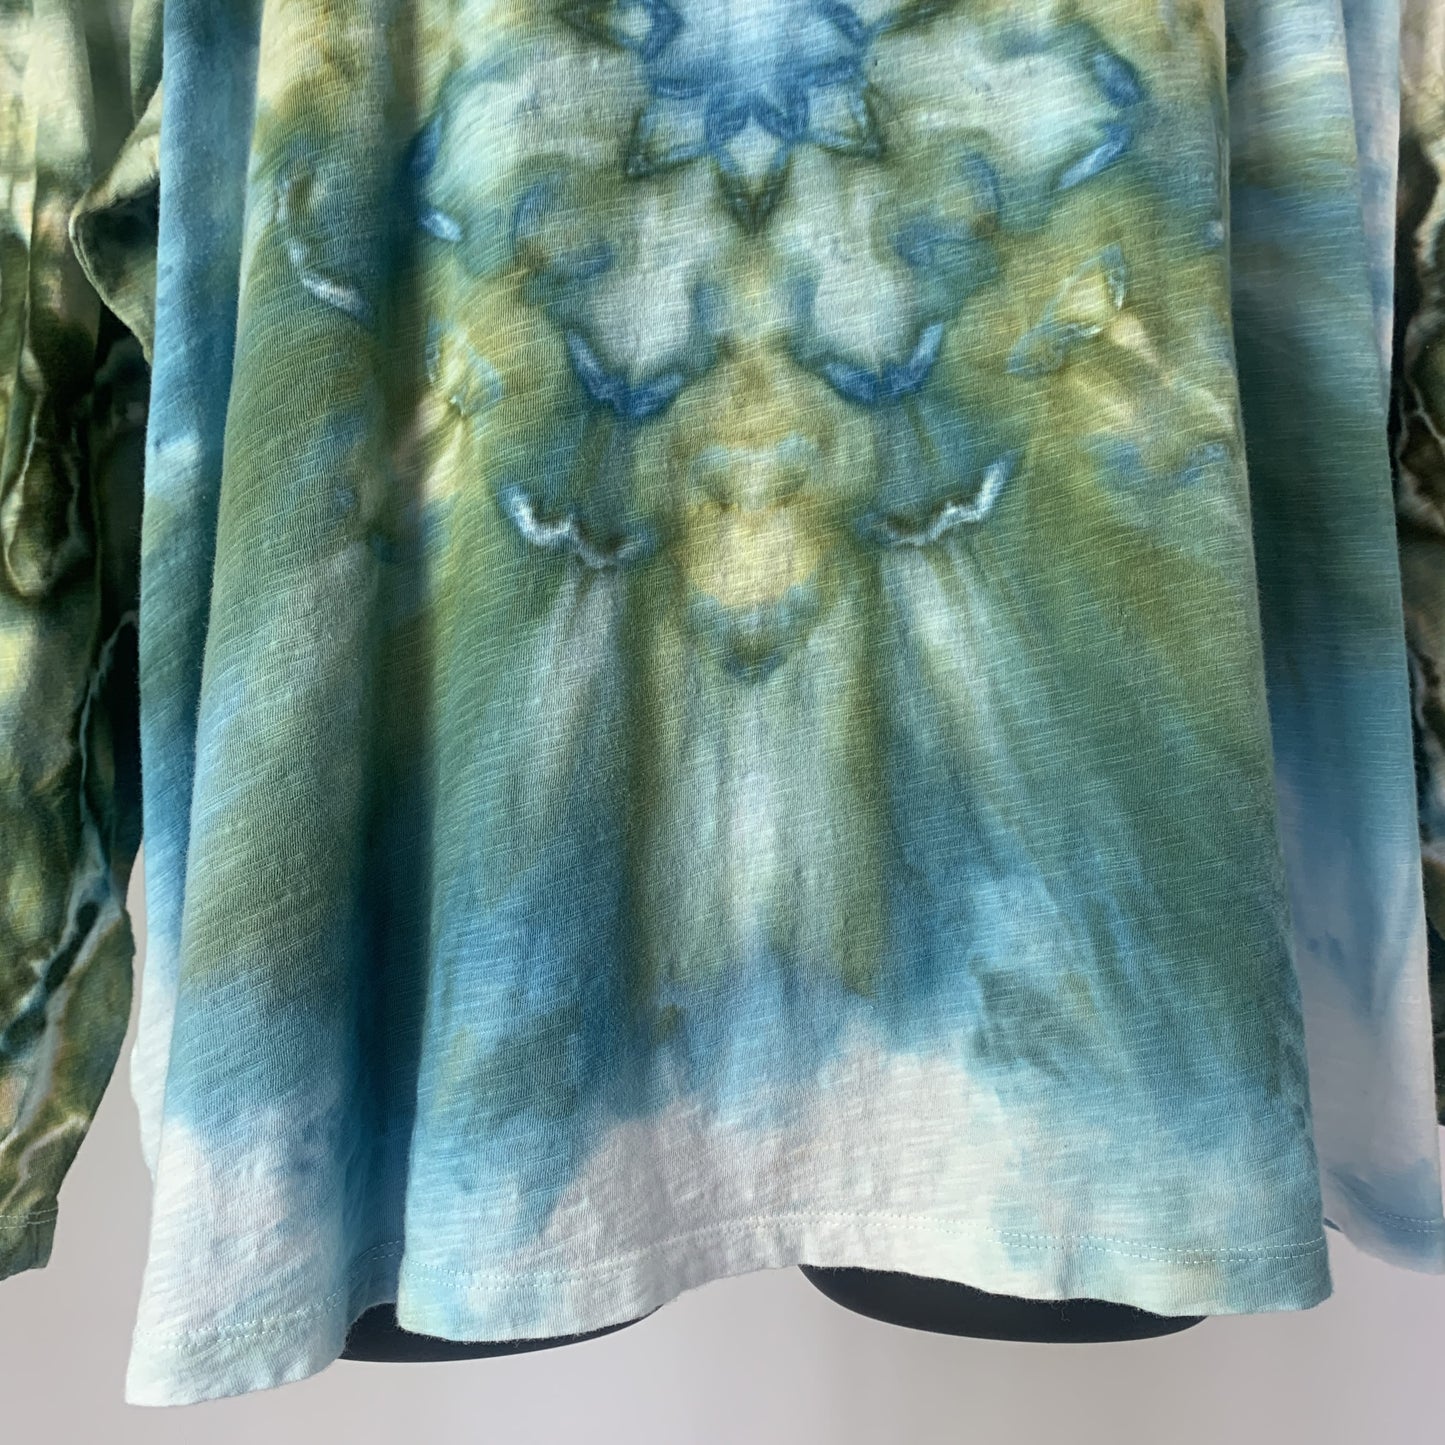 Earth Mandala and Ripples | T-shirt | 56" chest